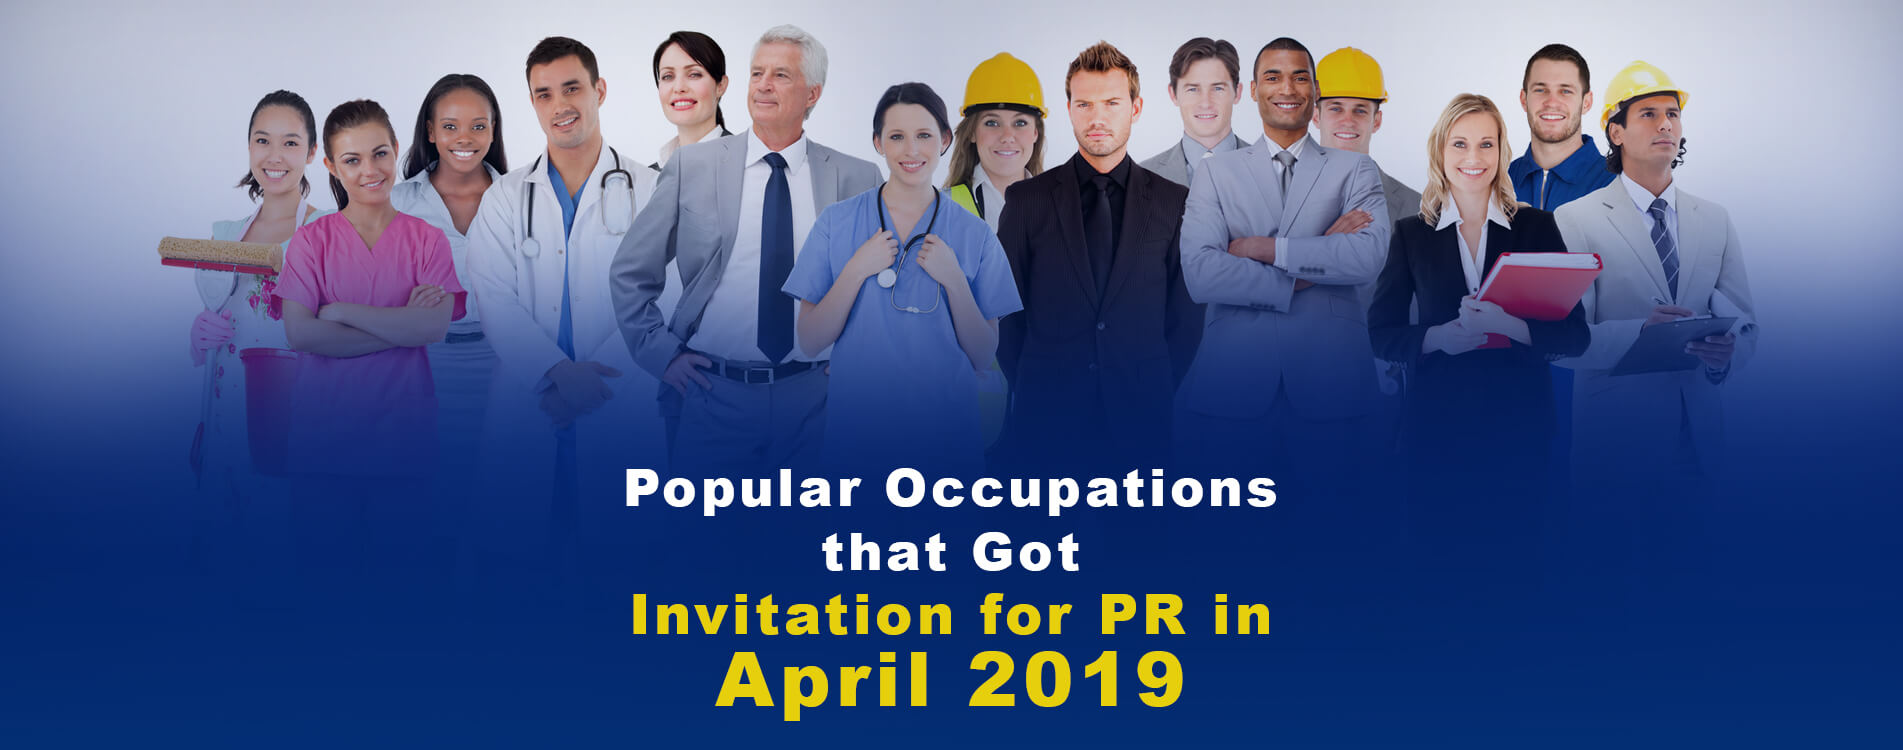 Popular Occupations that Got PR Invitations in April 2019